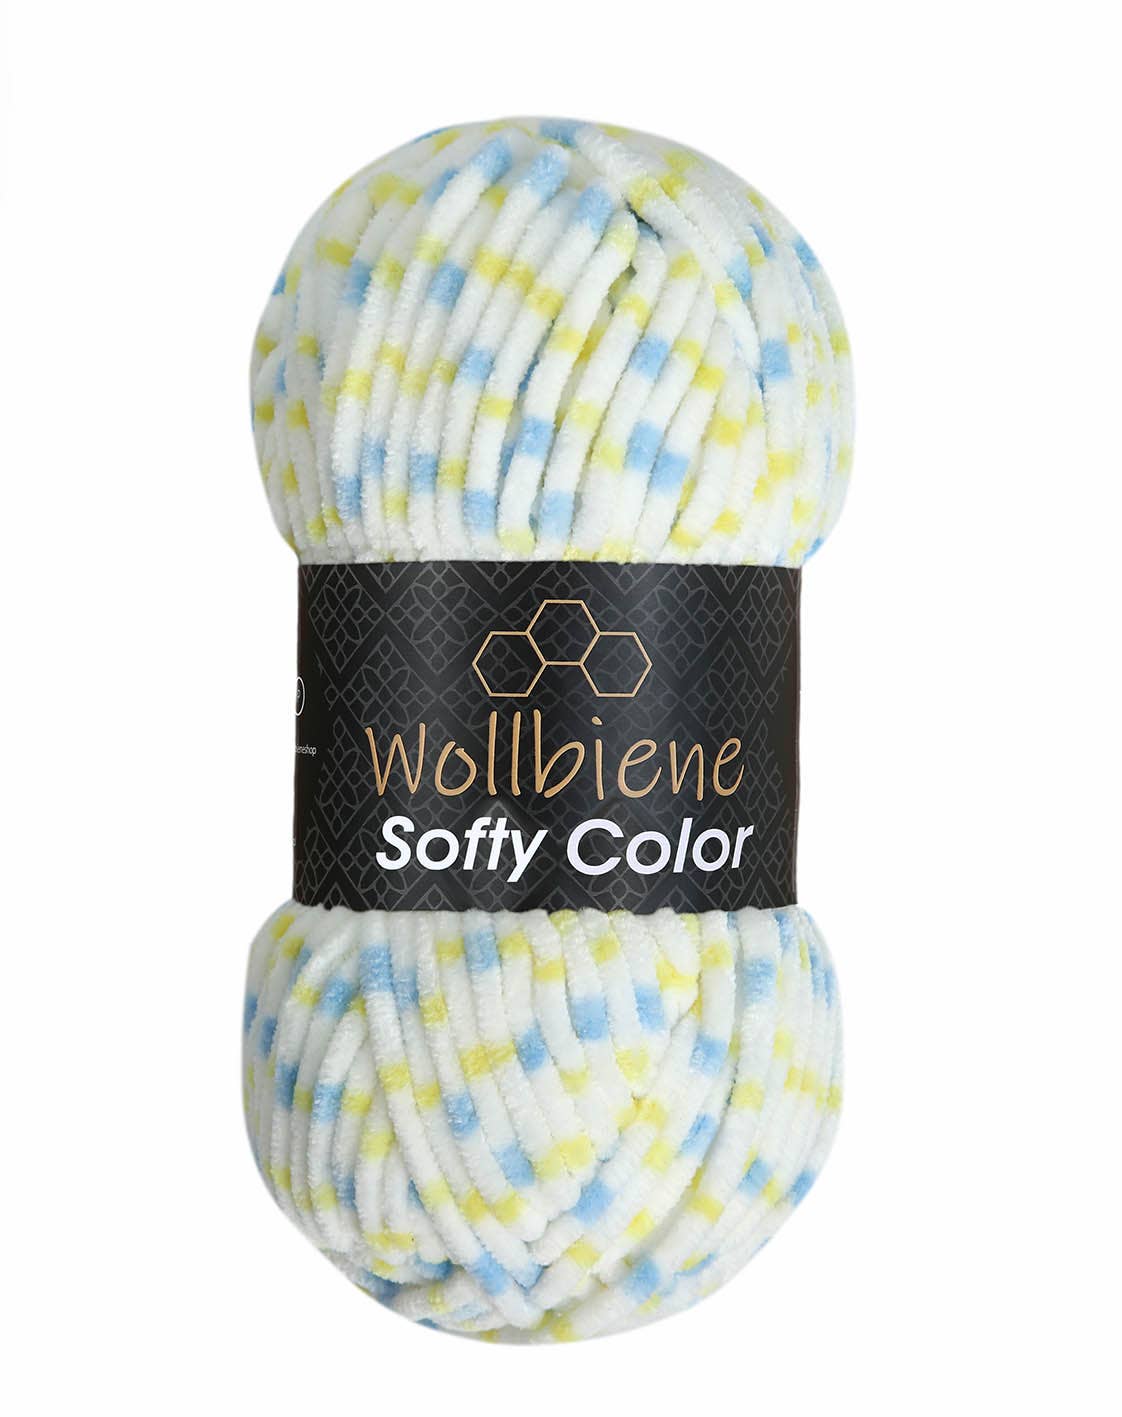 Wollbiene - Softy Color Chenille Wolle 100gr farbig Stricken Hobby DIY